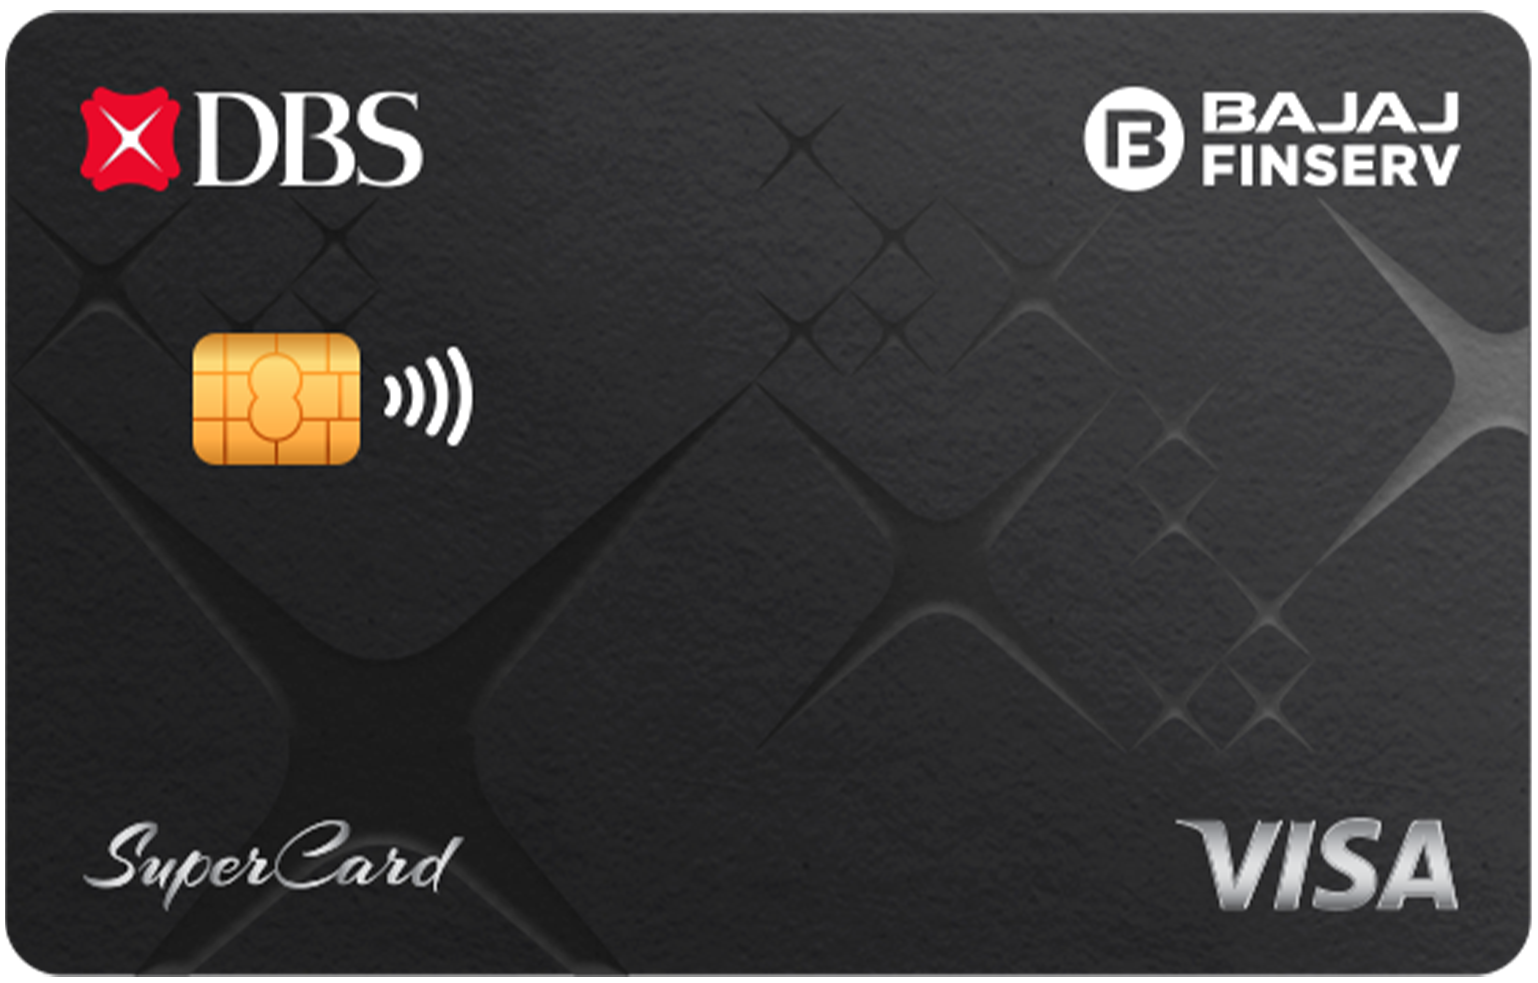 Bajaj Finserv DBS Bank SuperCard